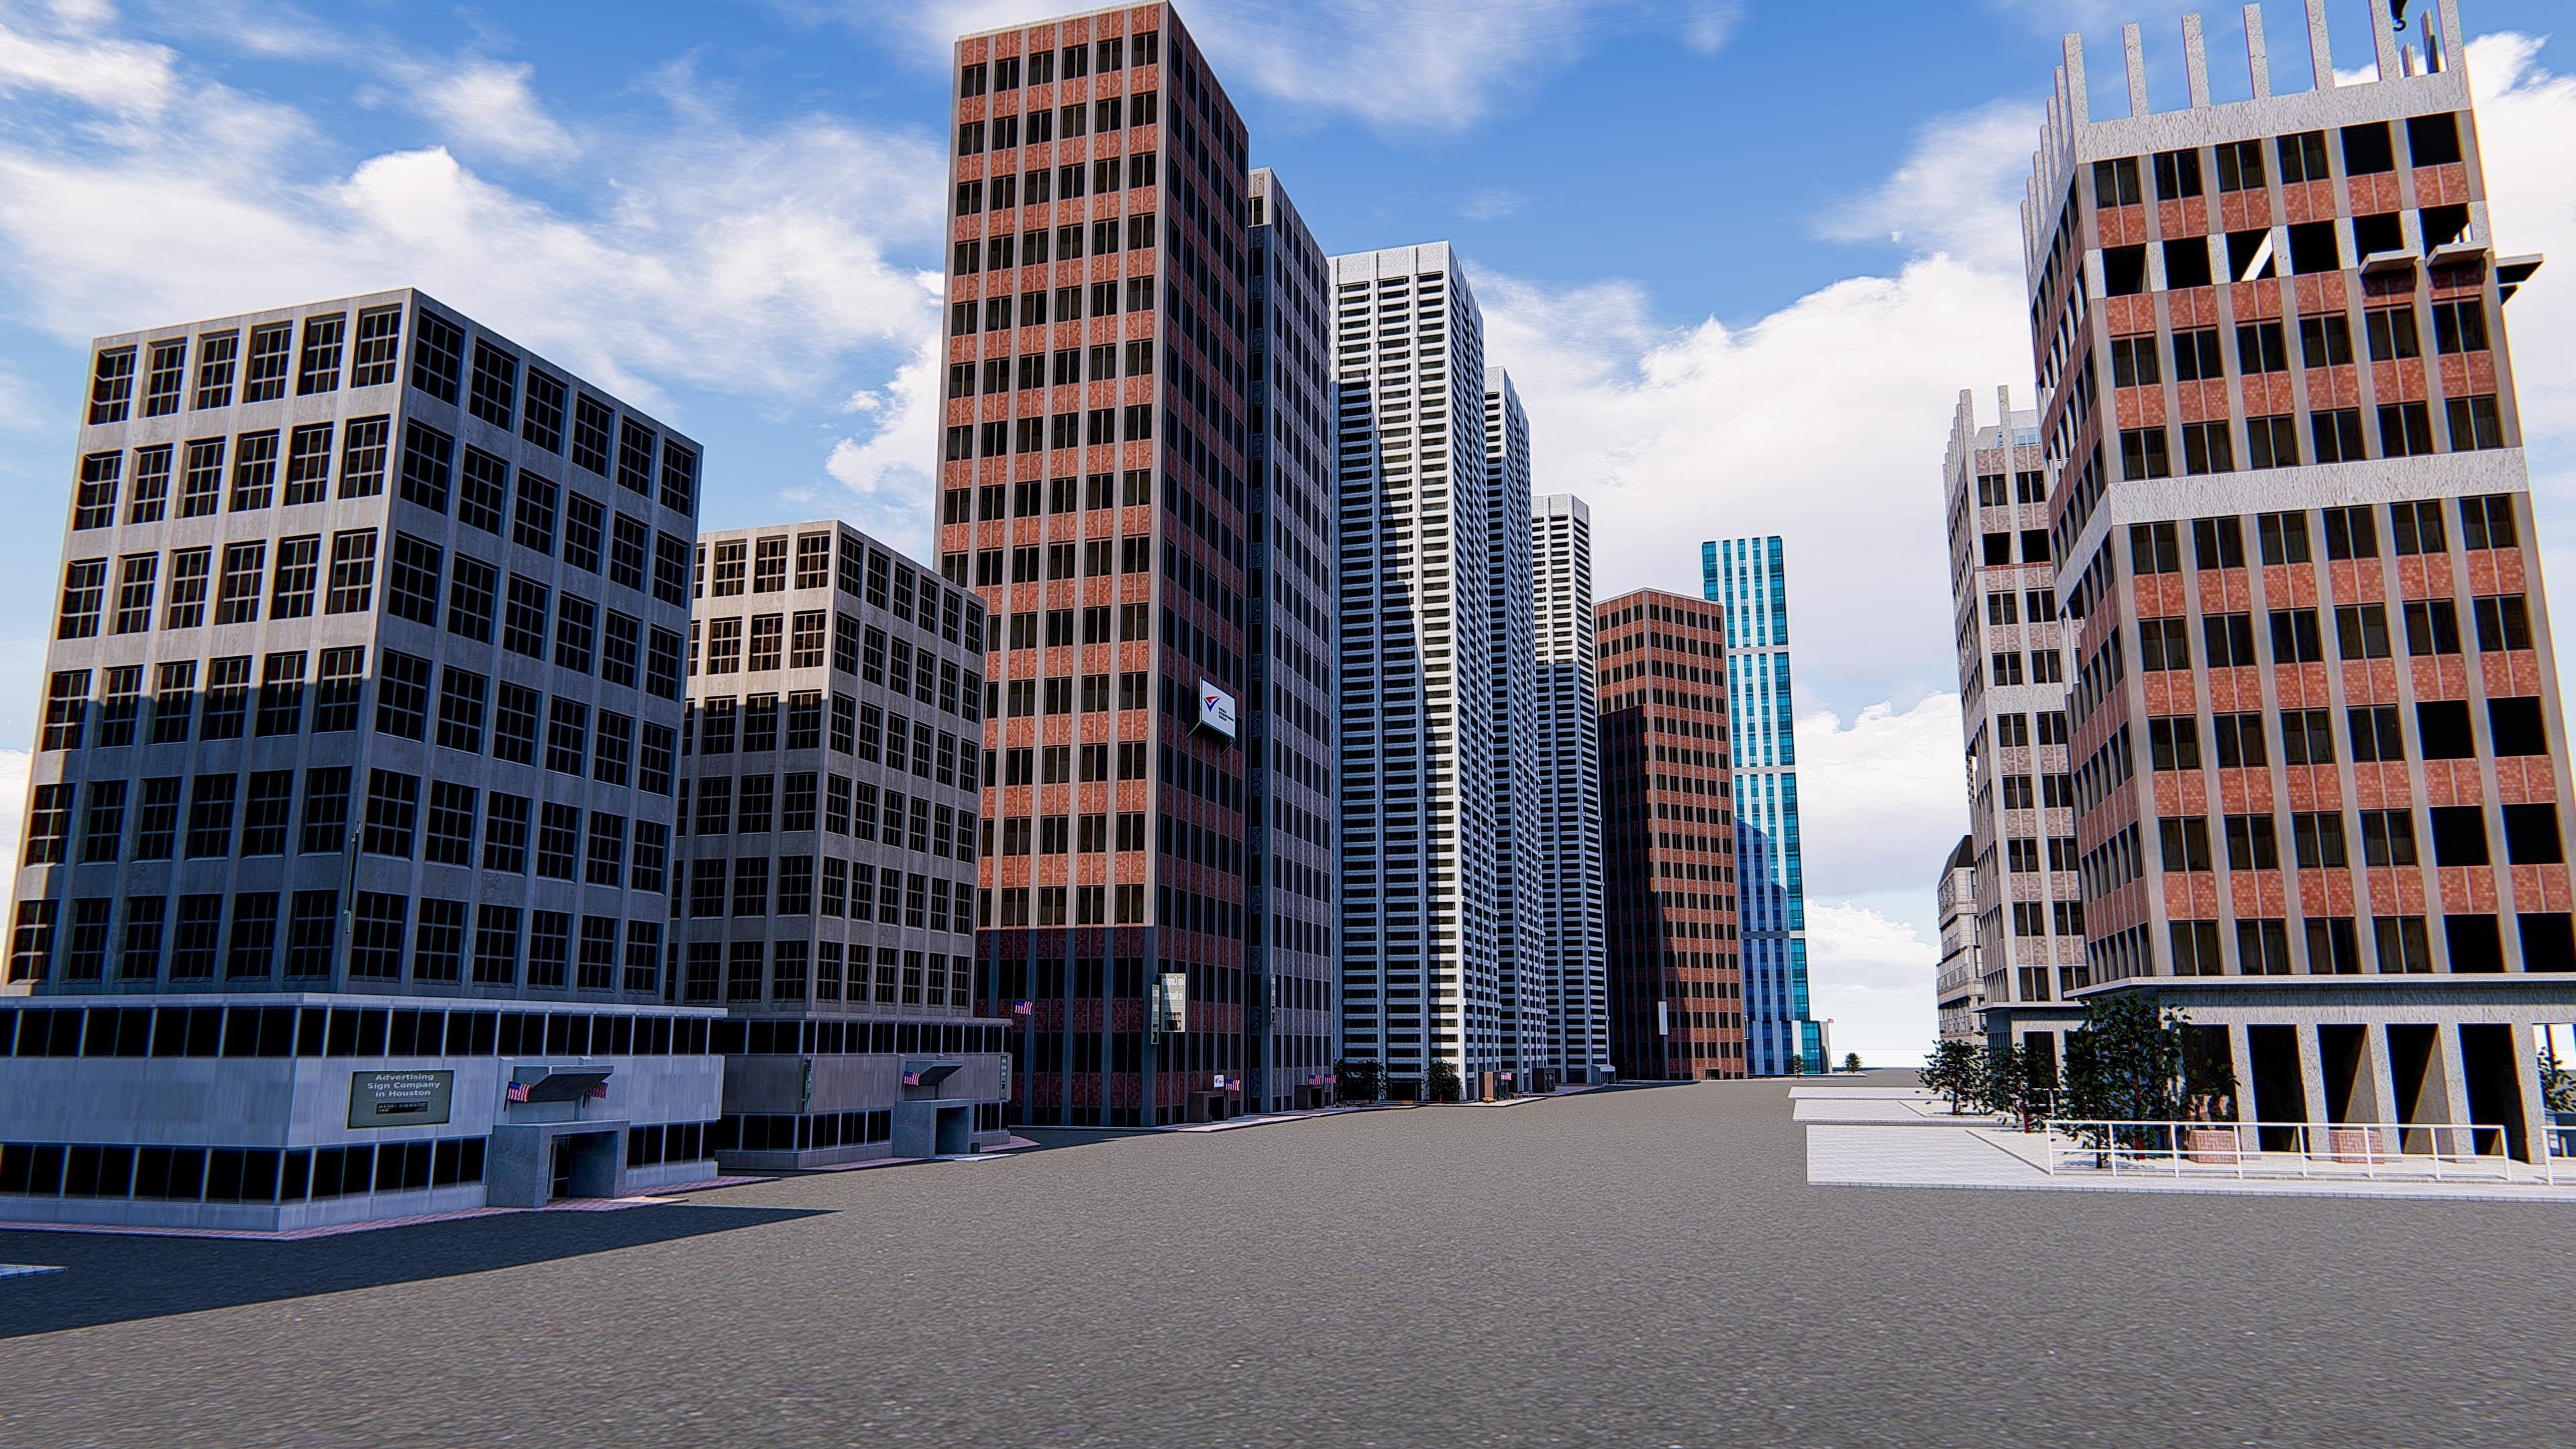 3D Exterior Office Buildings Skyscrapers 3dsmax Free Download